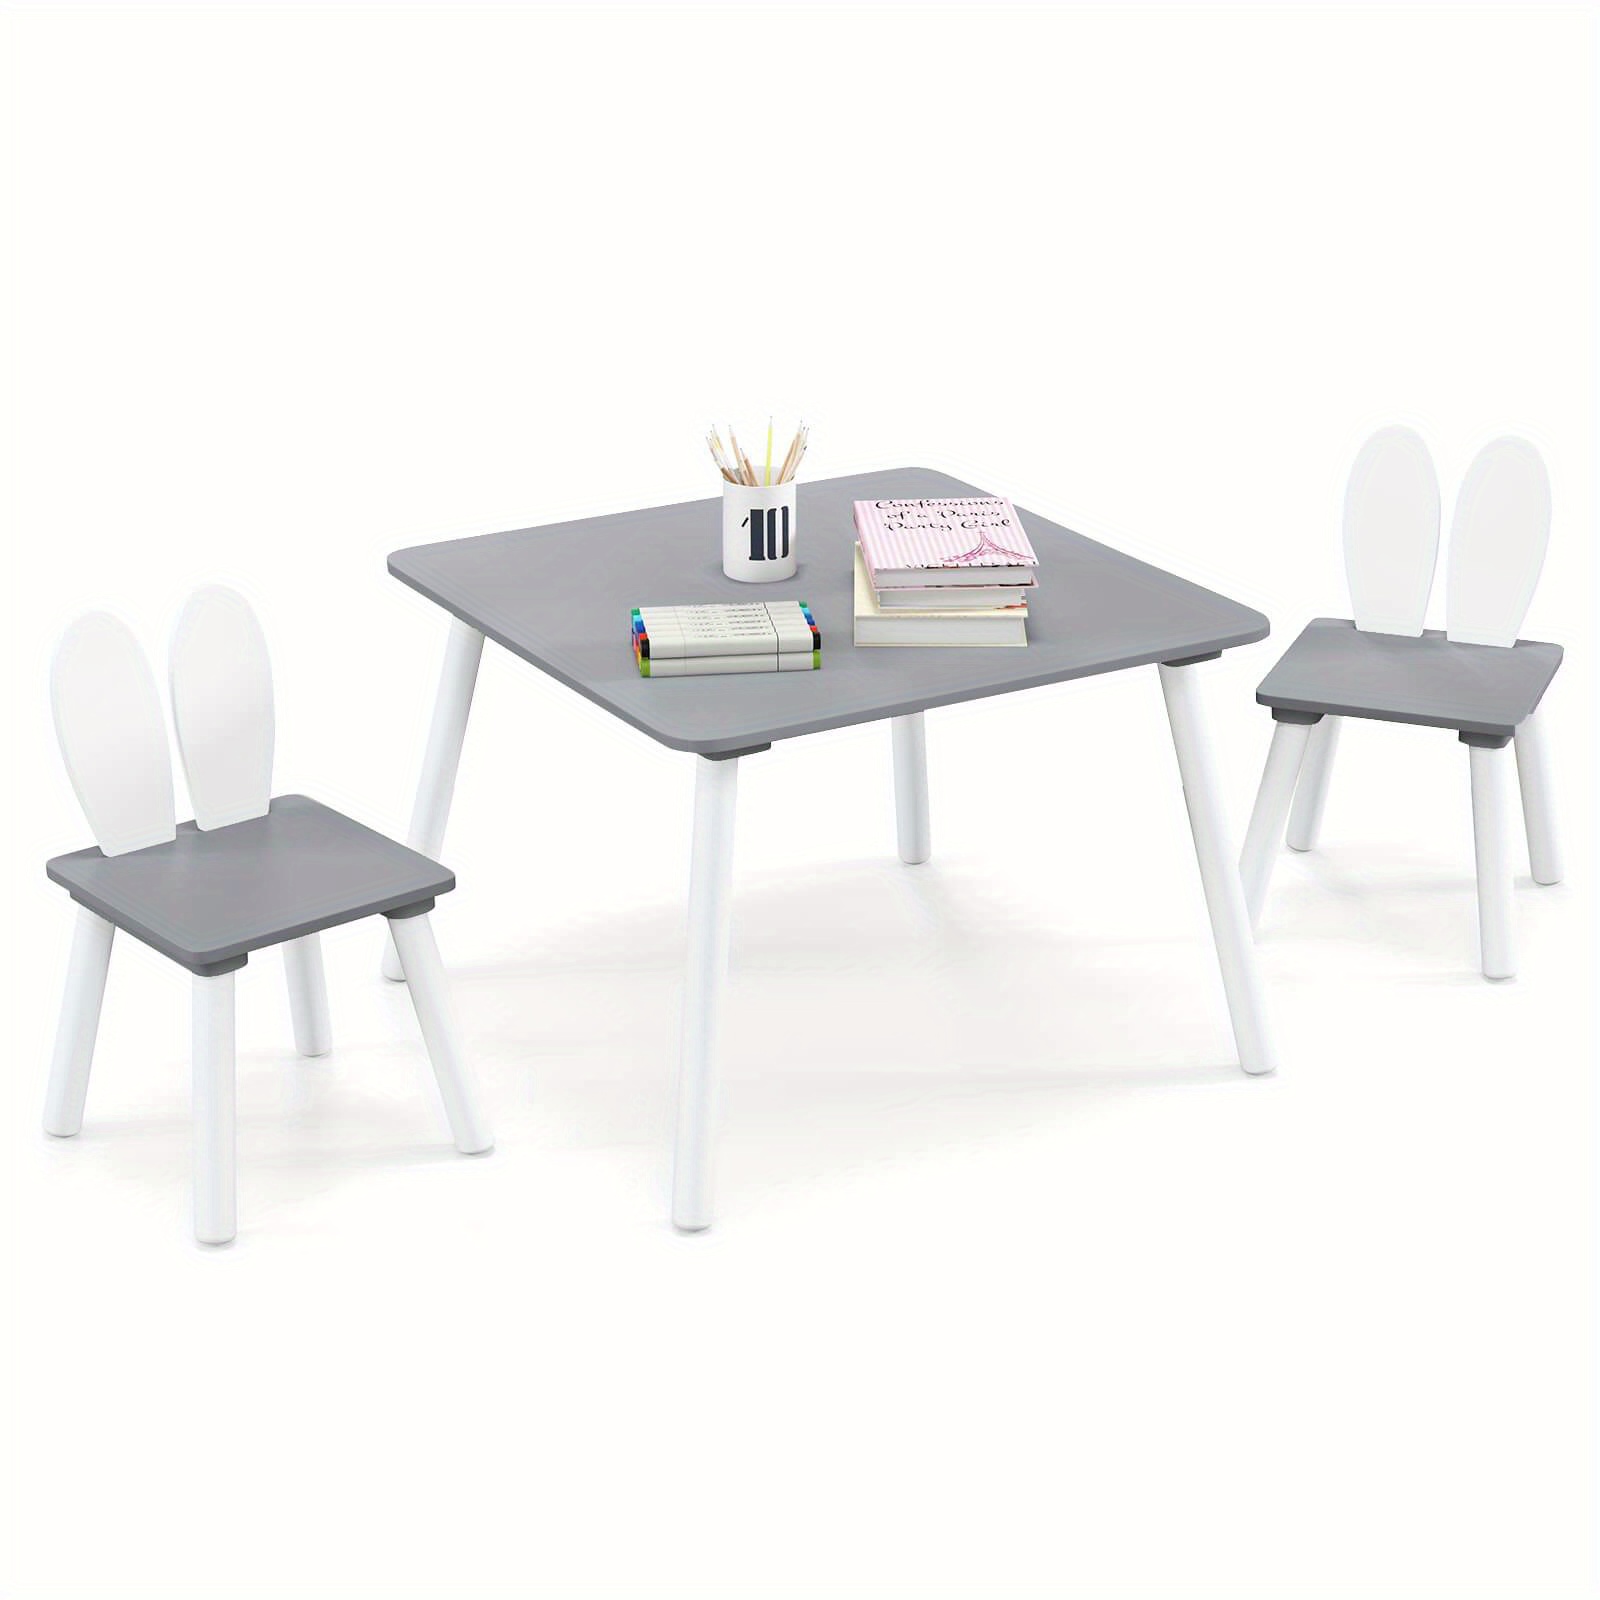 

Safstar 3 Pieces Kids Table & Chairs Set Children Wooden Furniture Set W/solid Wood Legs